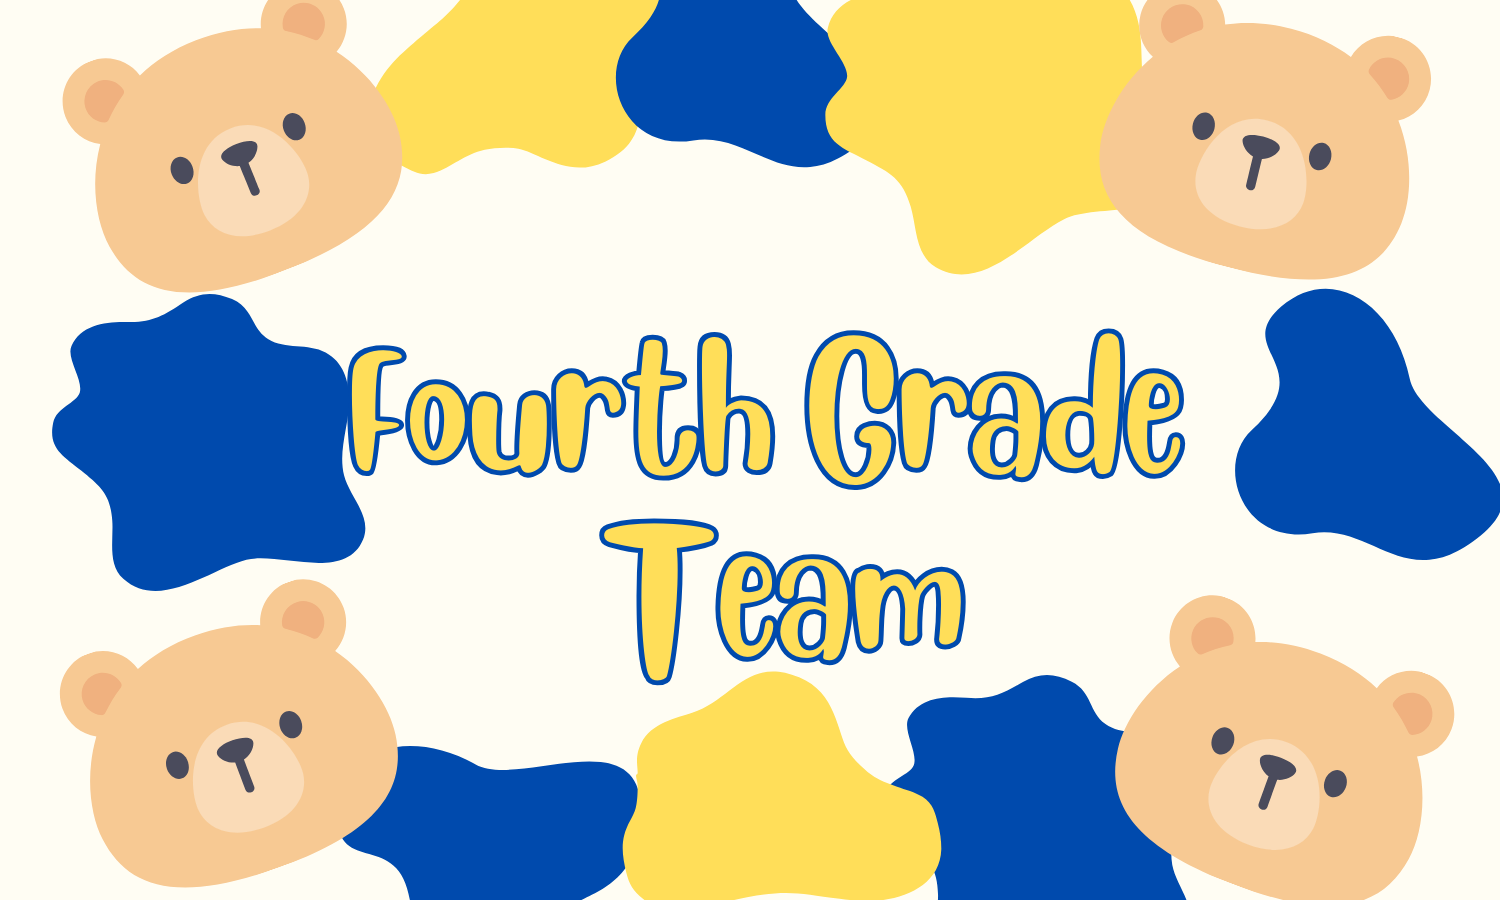 Fourth Grade Team Image Title